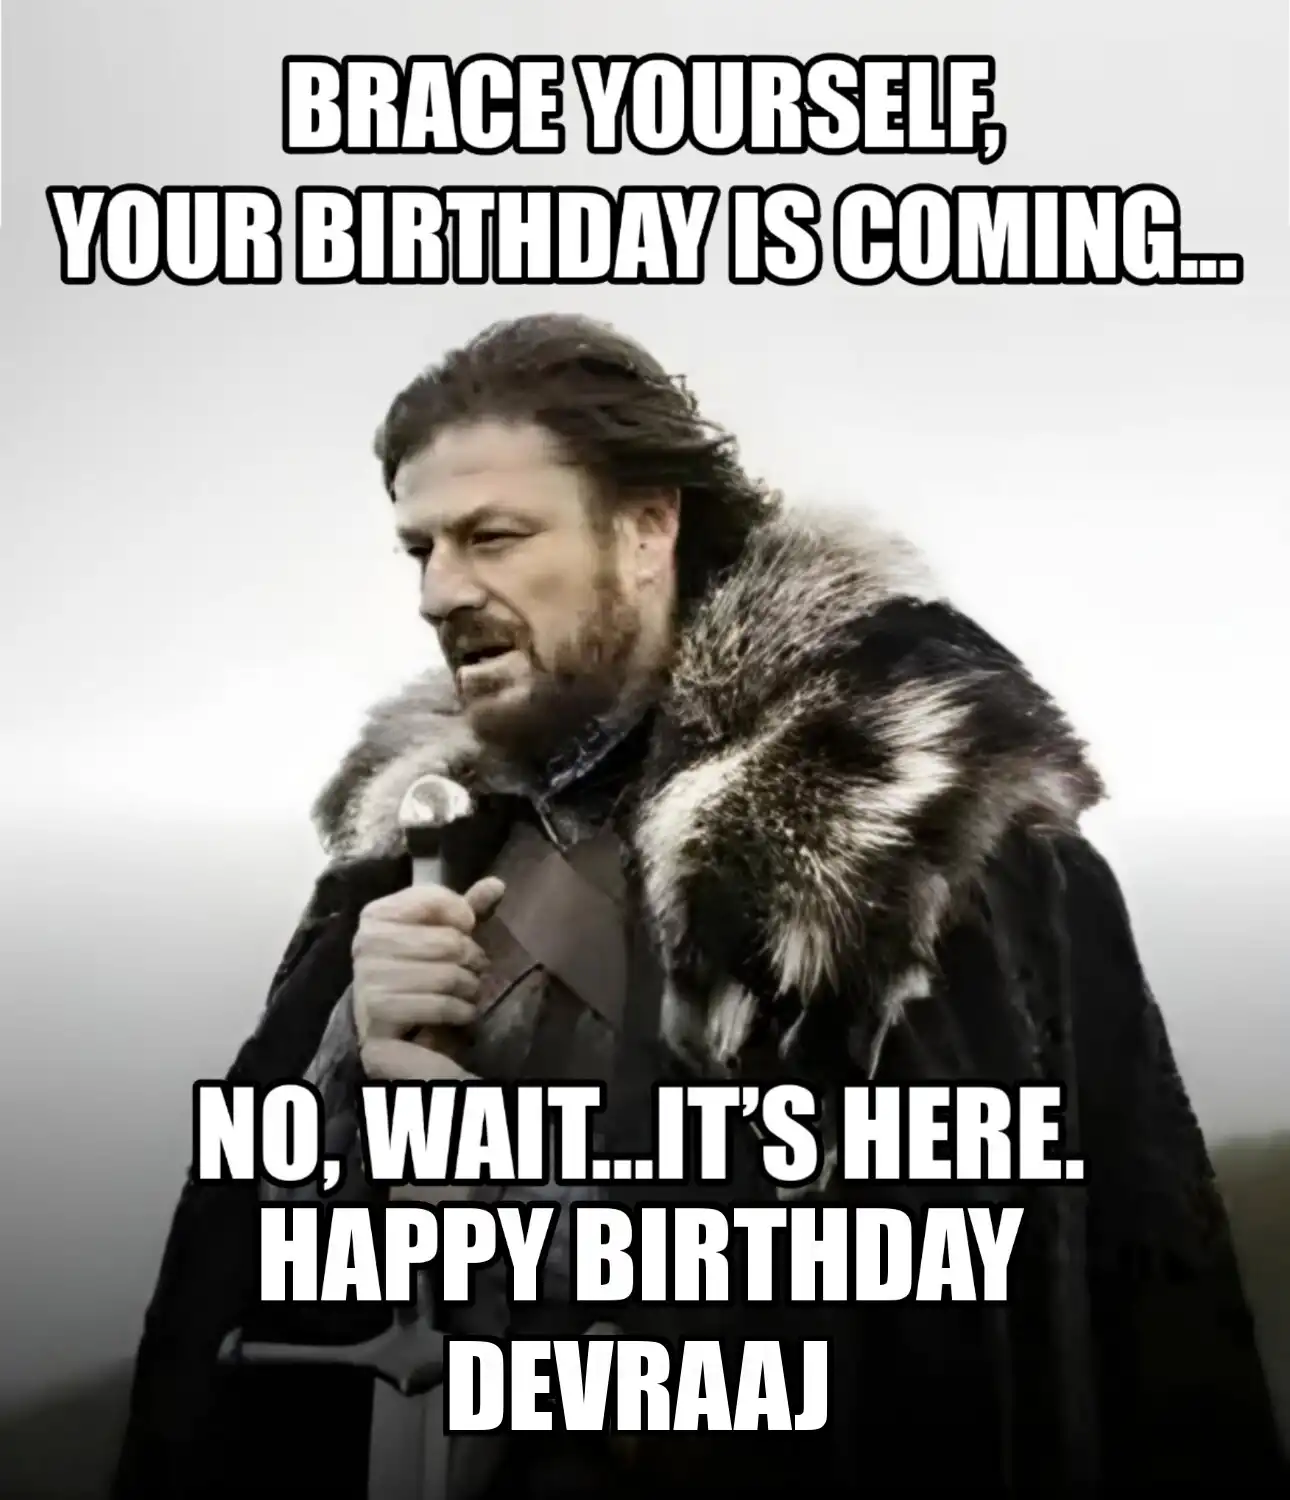 Happy Birthday Devraaj Brace Yourself Your Birthday Is Coming Meme